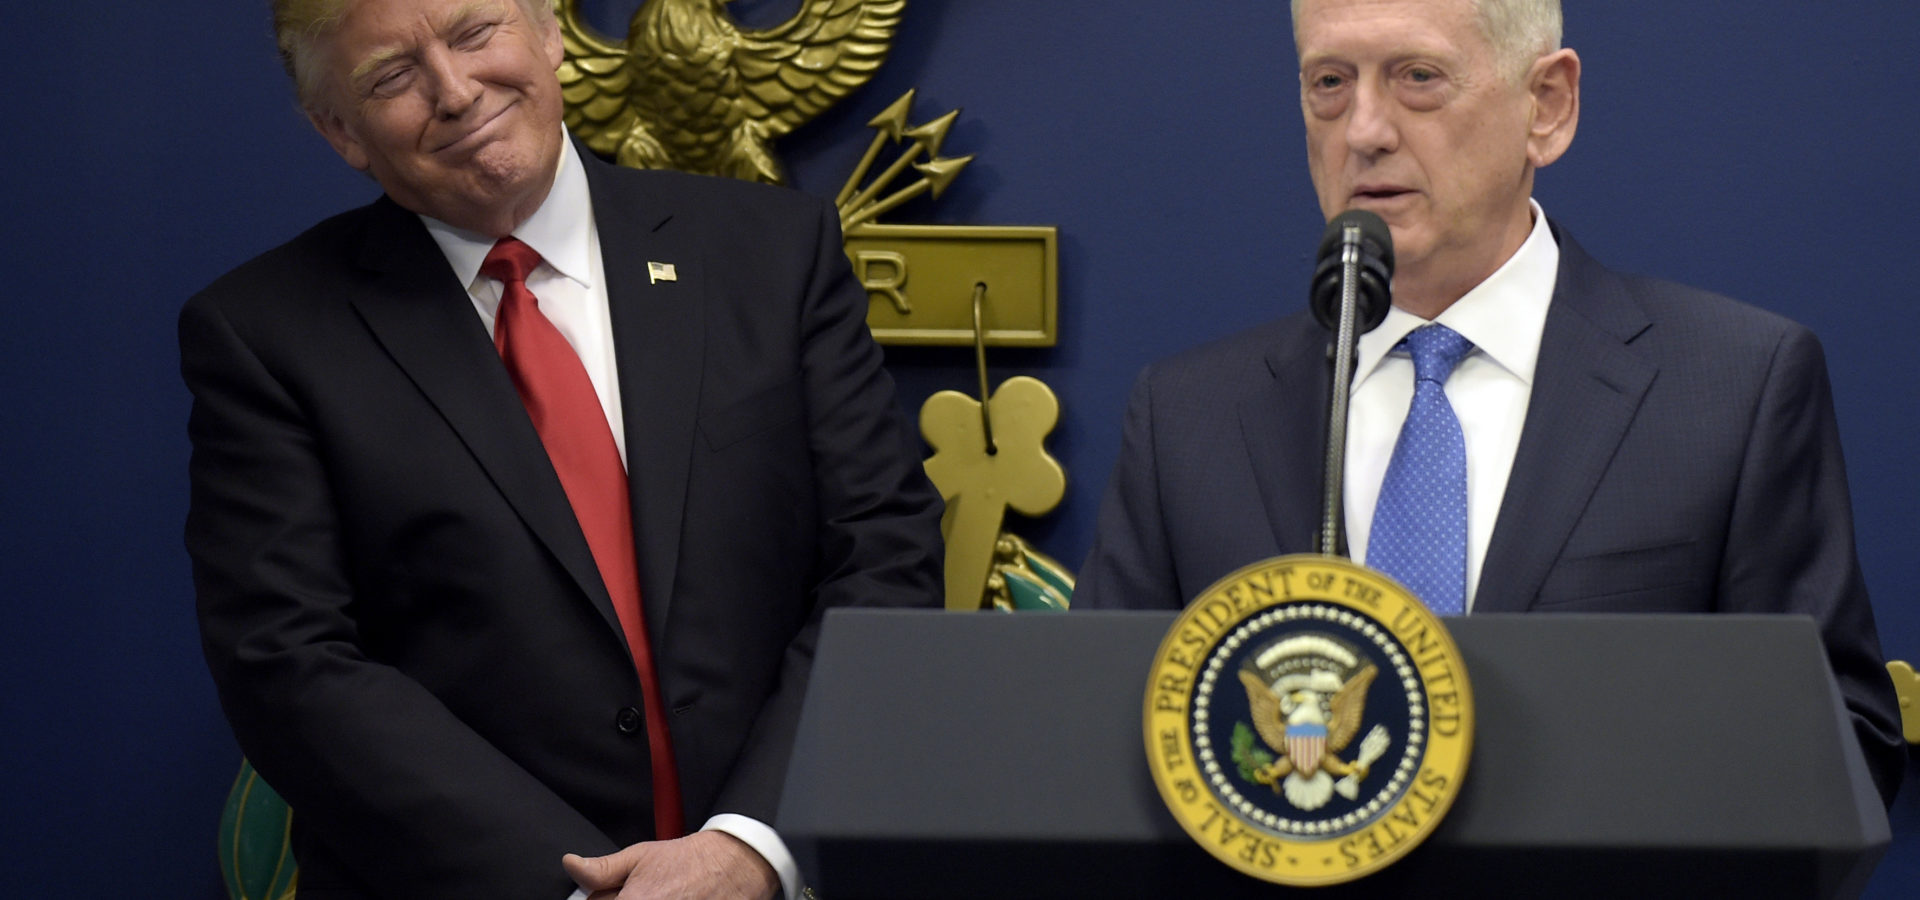 Donald Trump, left, listens as Defense Secretary James Mattis, right, speaks at the Pentagon in Washington. (AP/Susan Walsh)